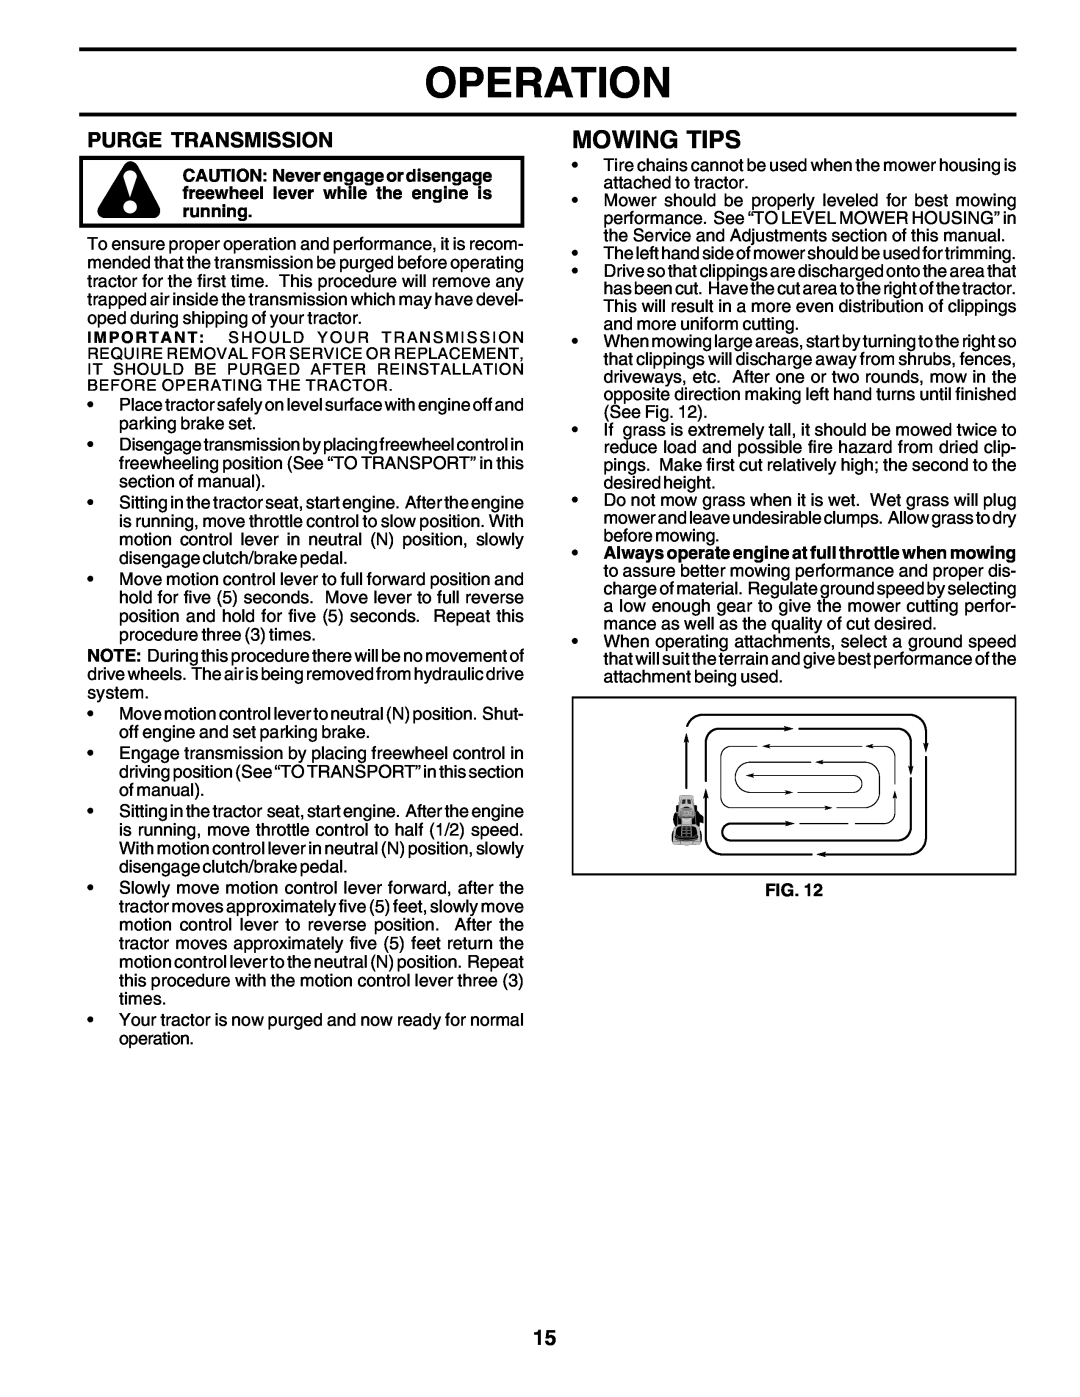 Poulan PRGT22H50C owner manual Mowing Tips, Operation, Purge Transmission 